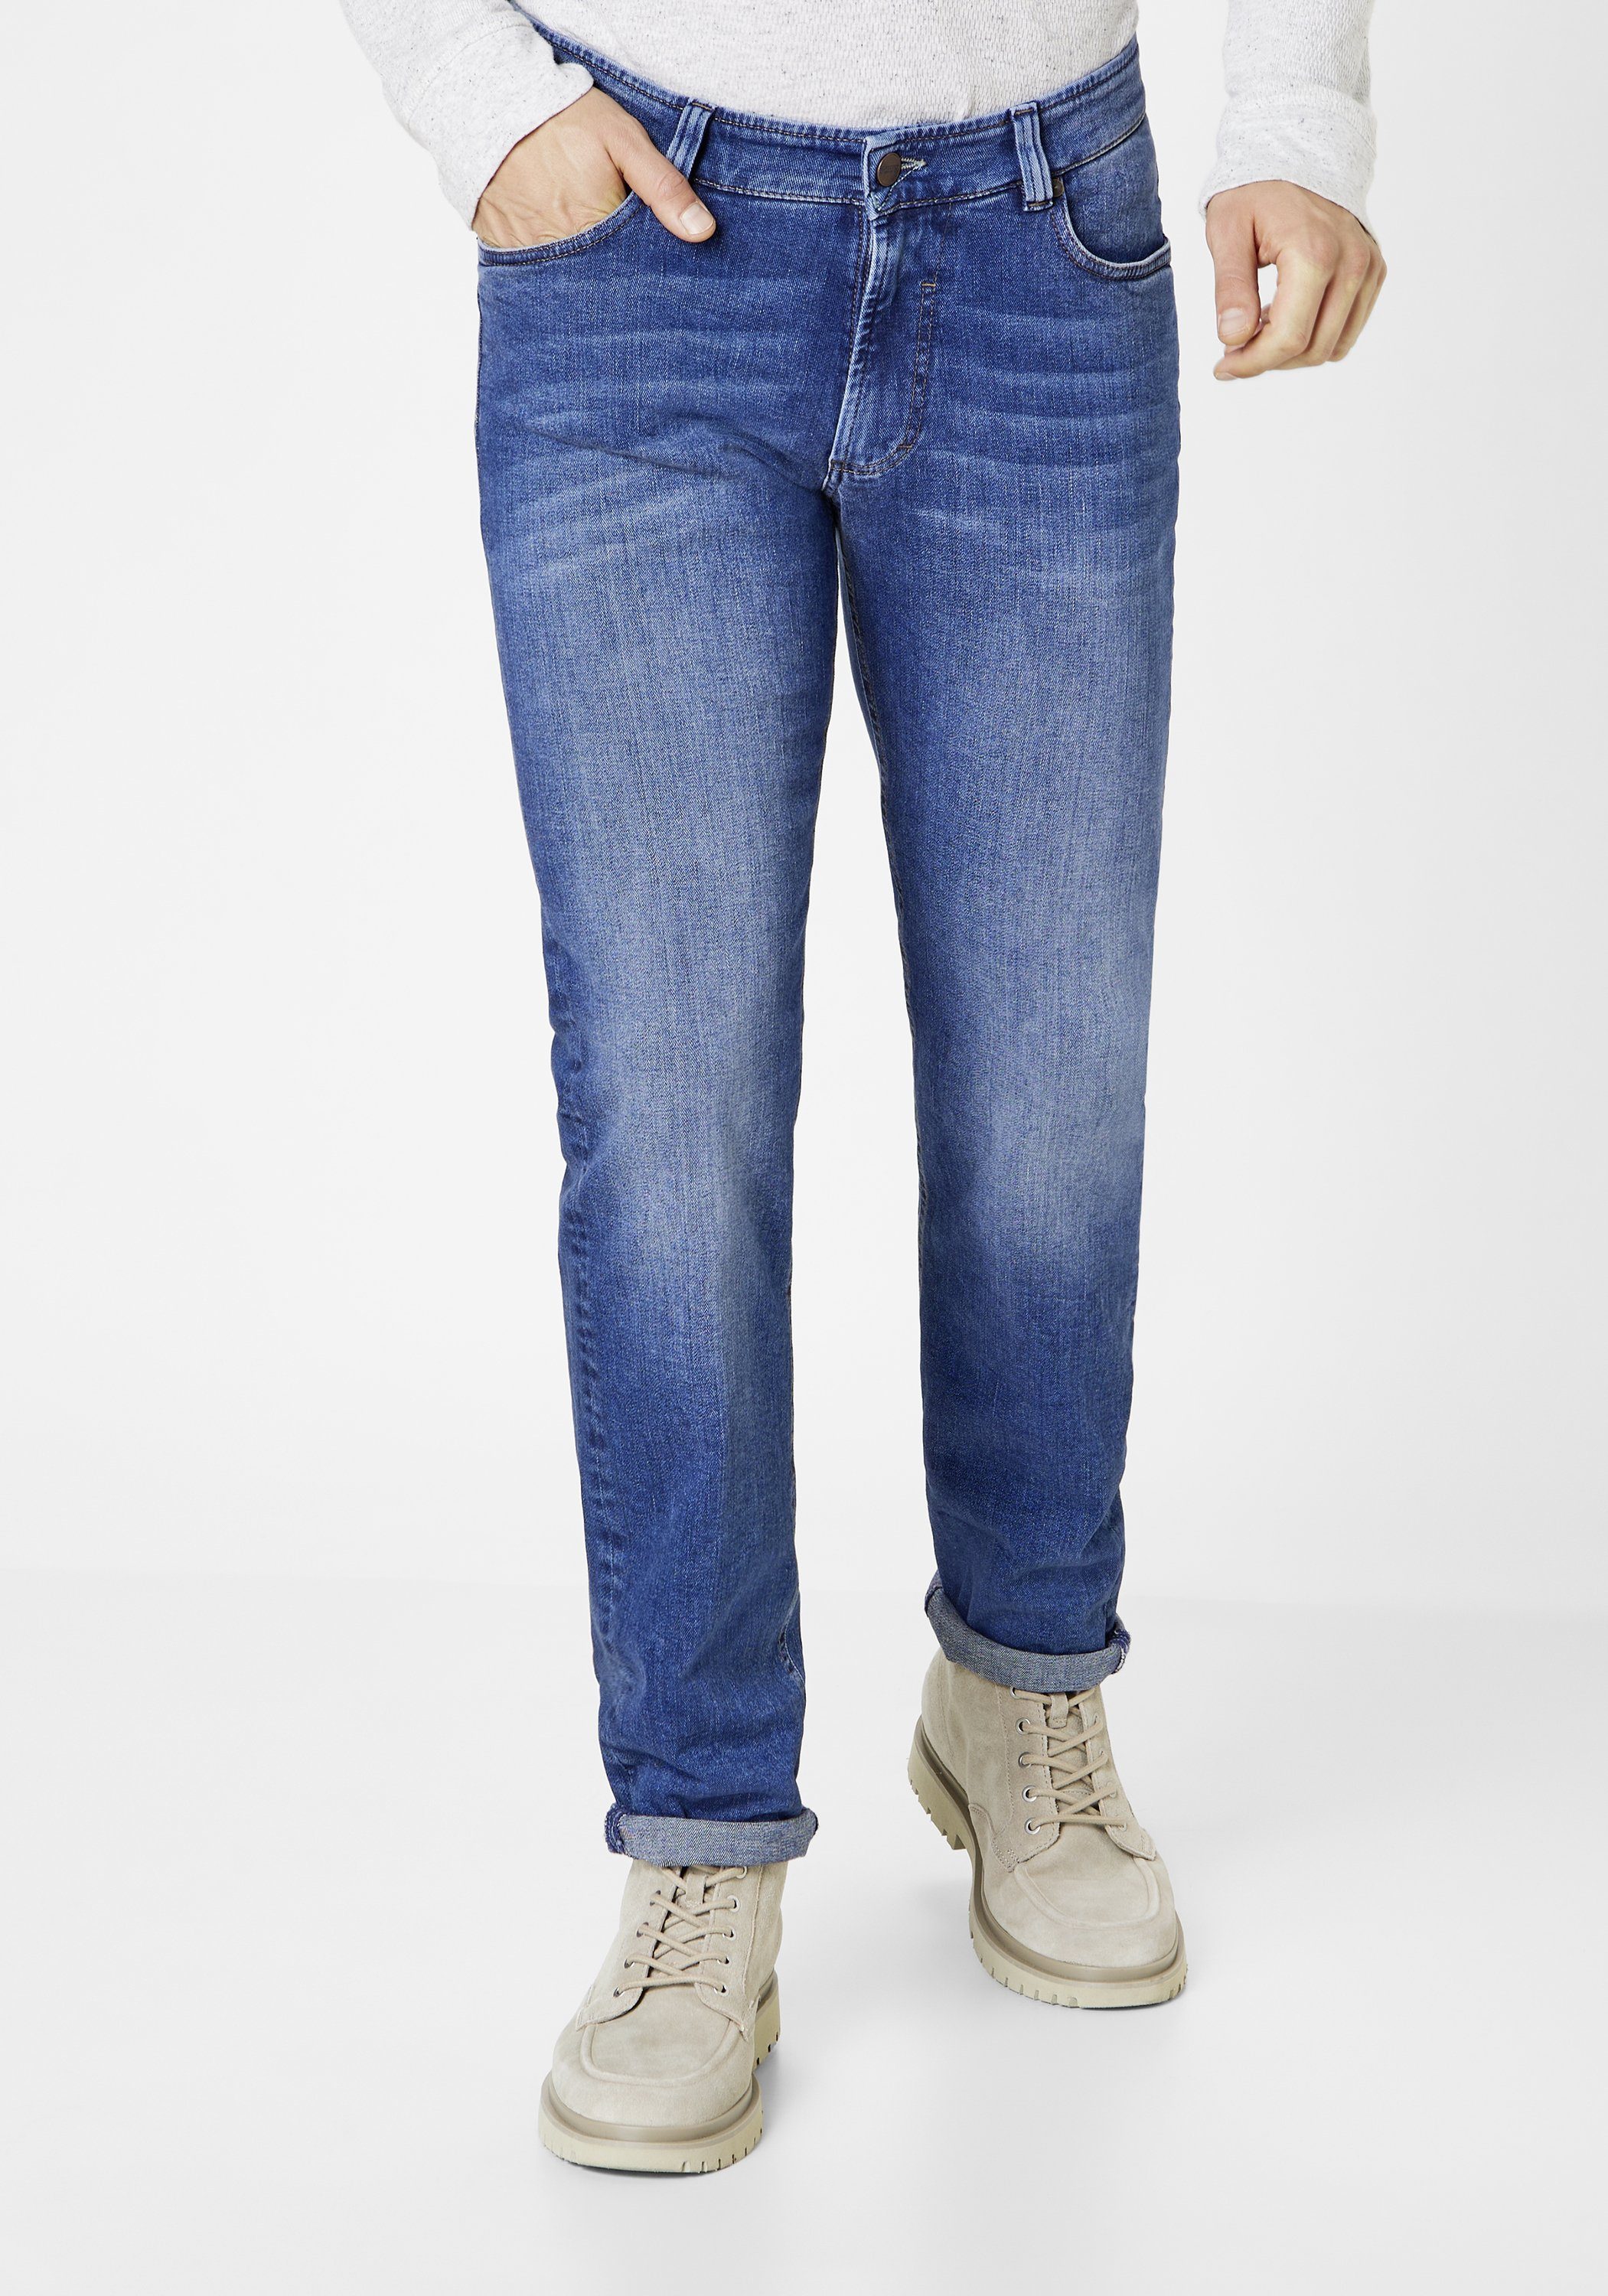 Paddock's 5-Pocket-Jeans DUKE Superior Straight-Fit Jeans dark blue vintage wash